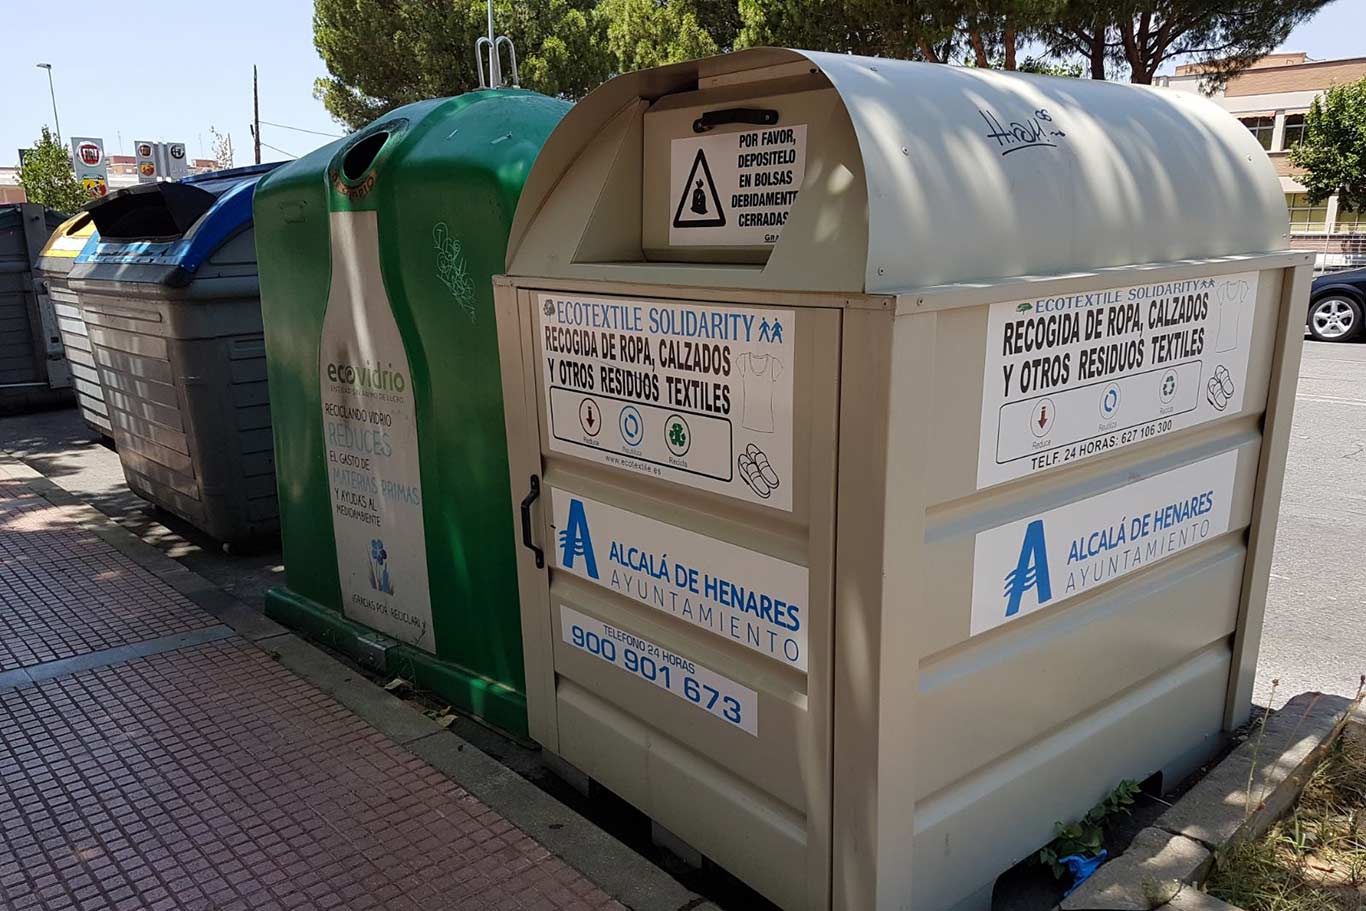 Alcalá de Henares recicló cerca de 350 toneladas de ropa en 2016 - Dream  Alcalá